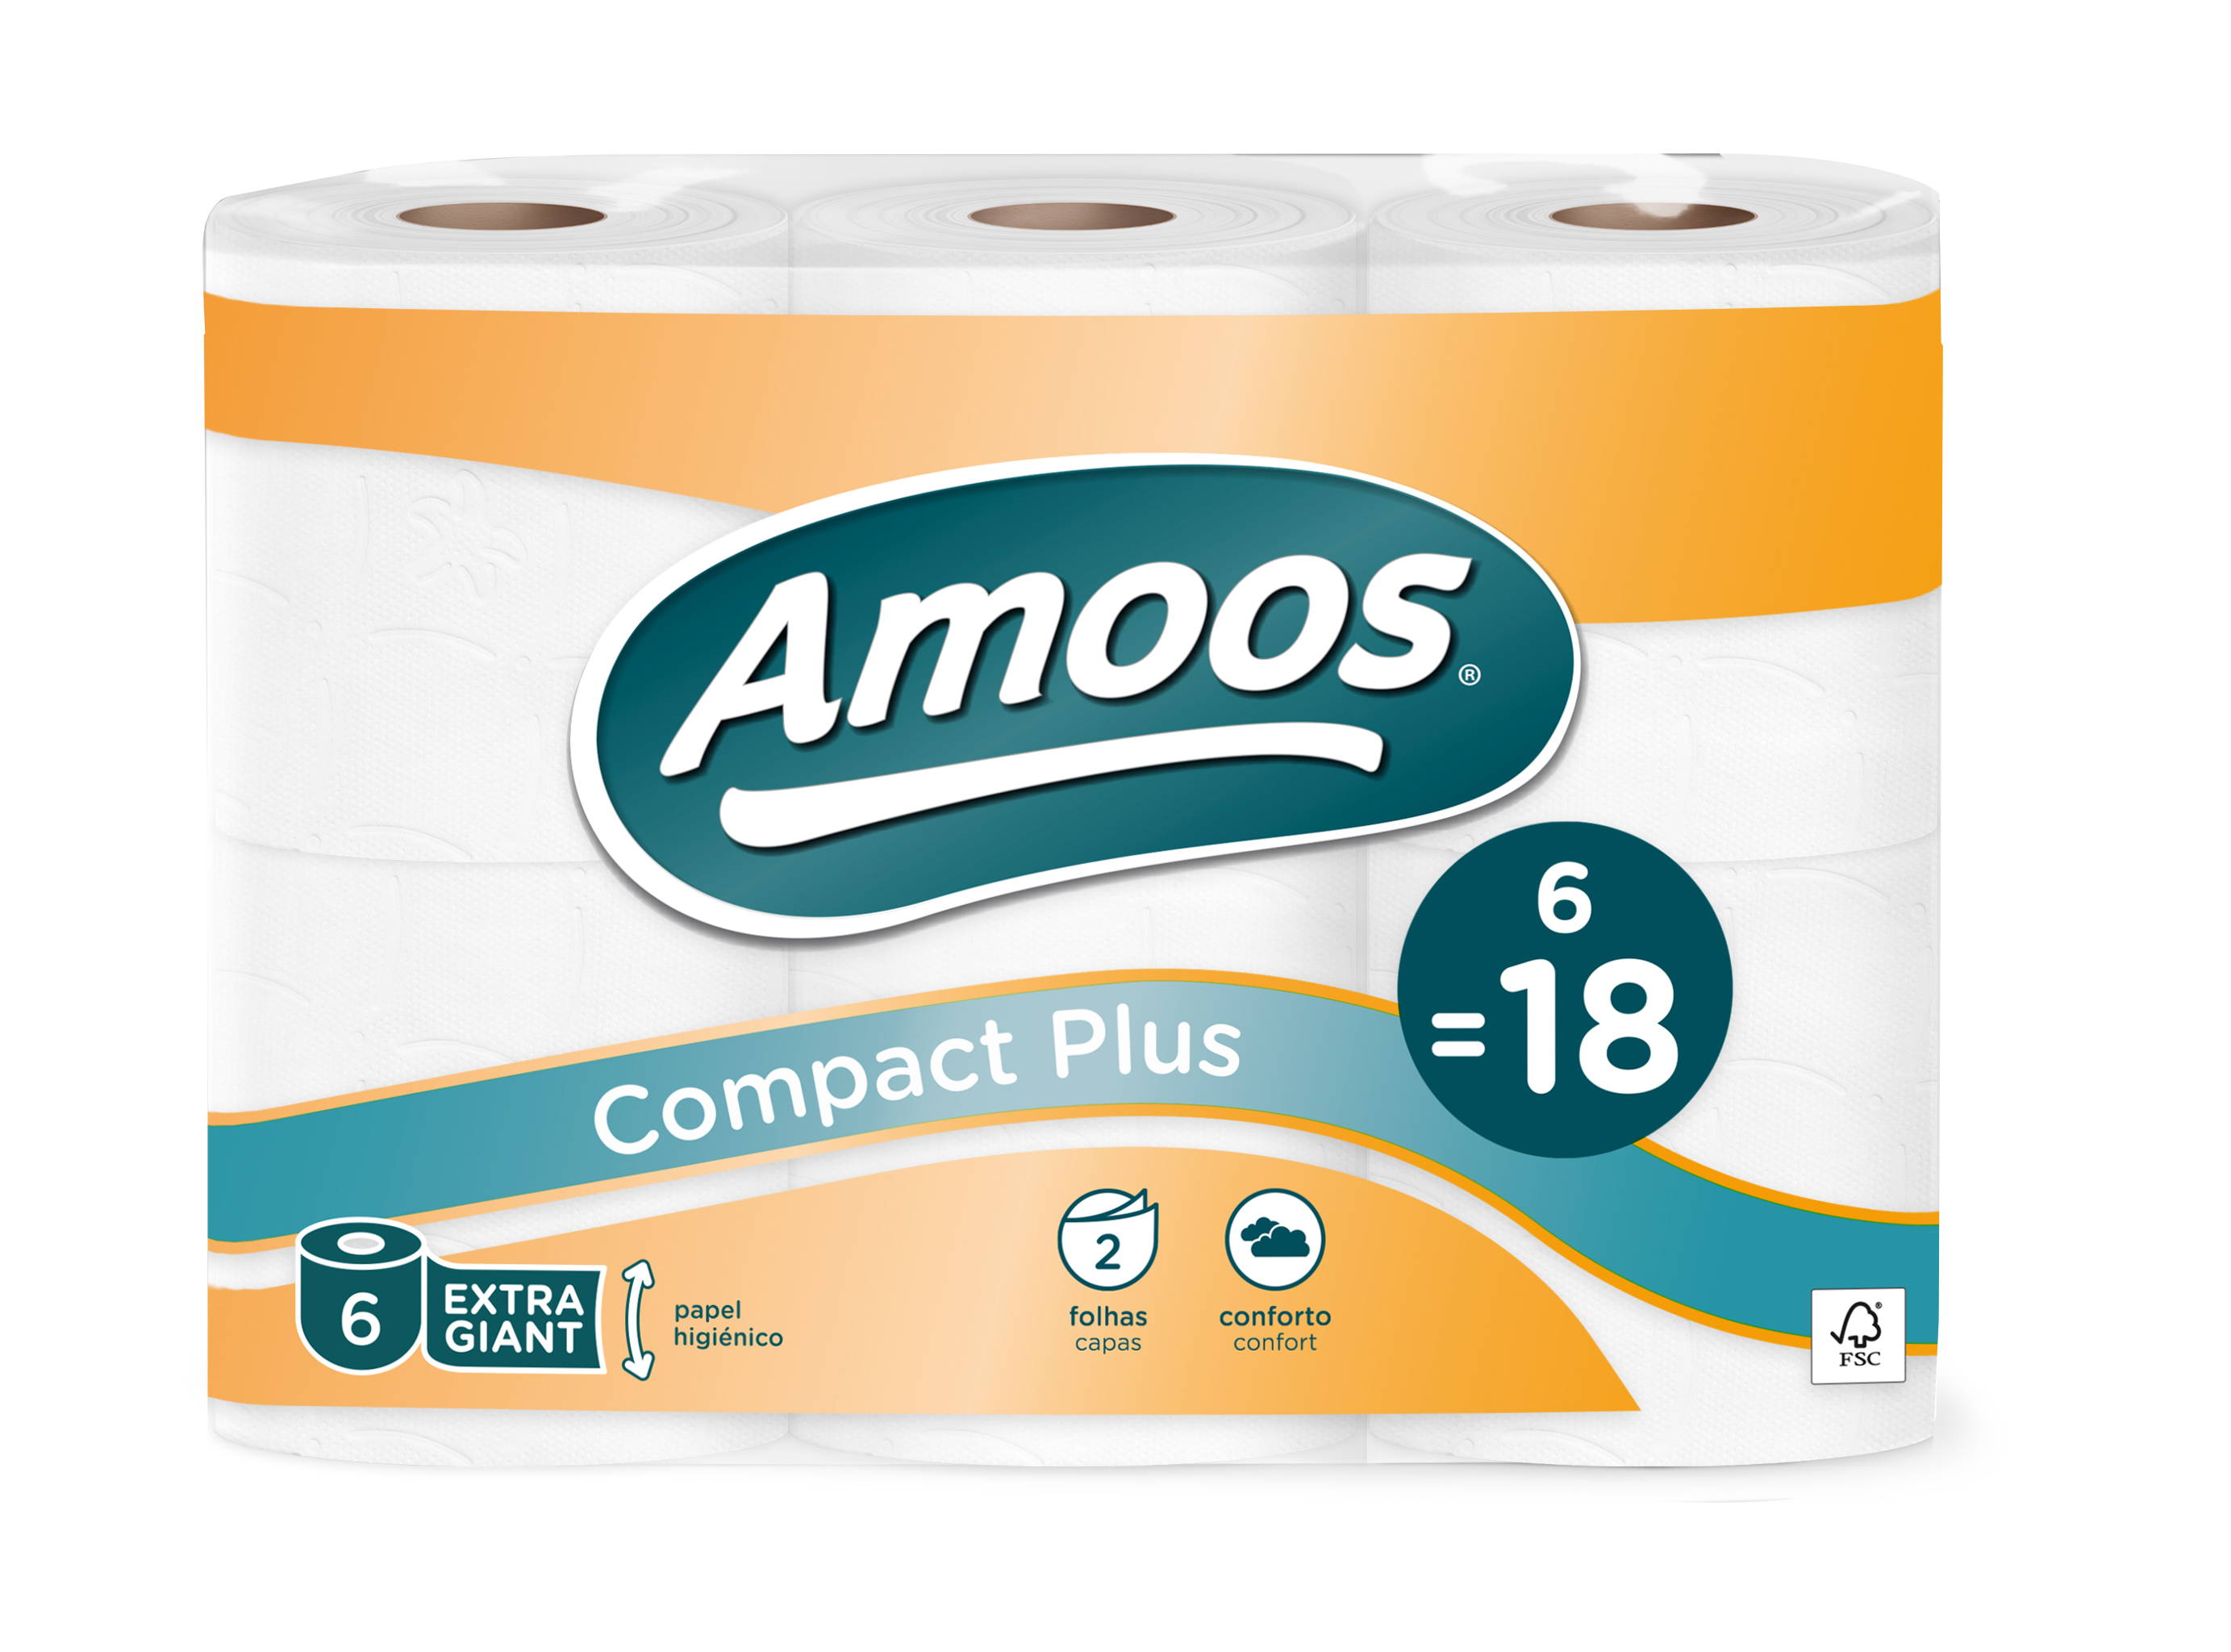 Tualetes papīrs Amoos Compact plus, T4, 2 slāņi, 6 ruļļi/iep.